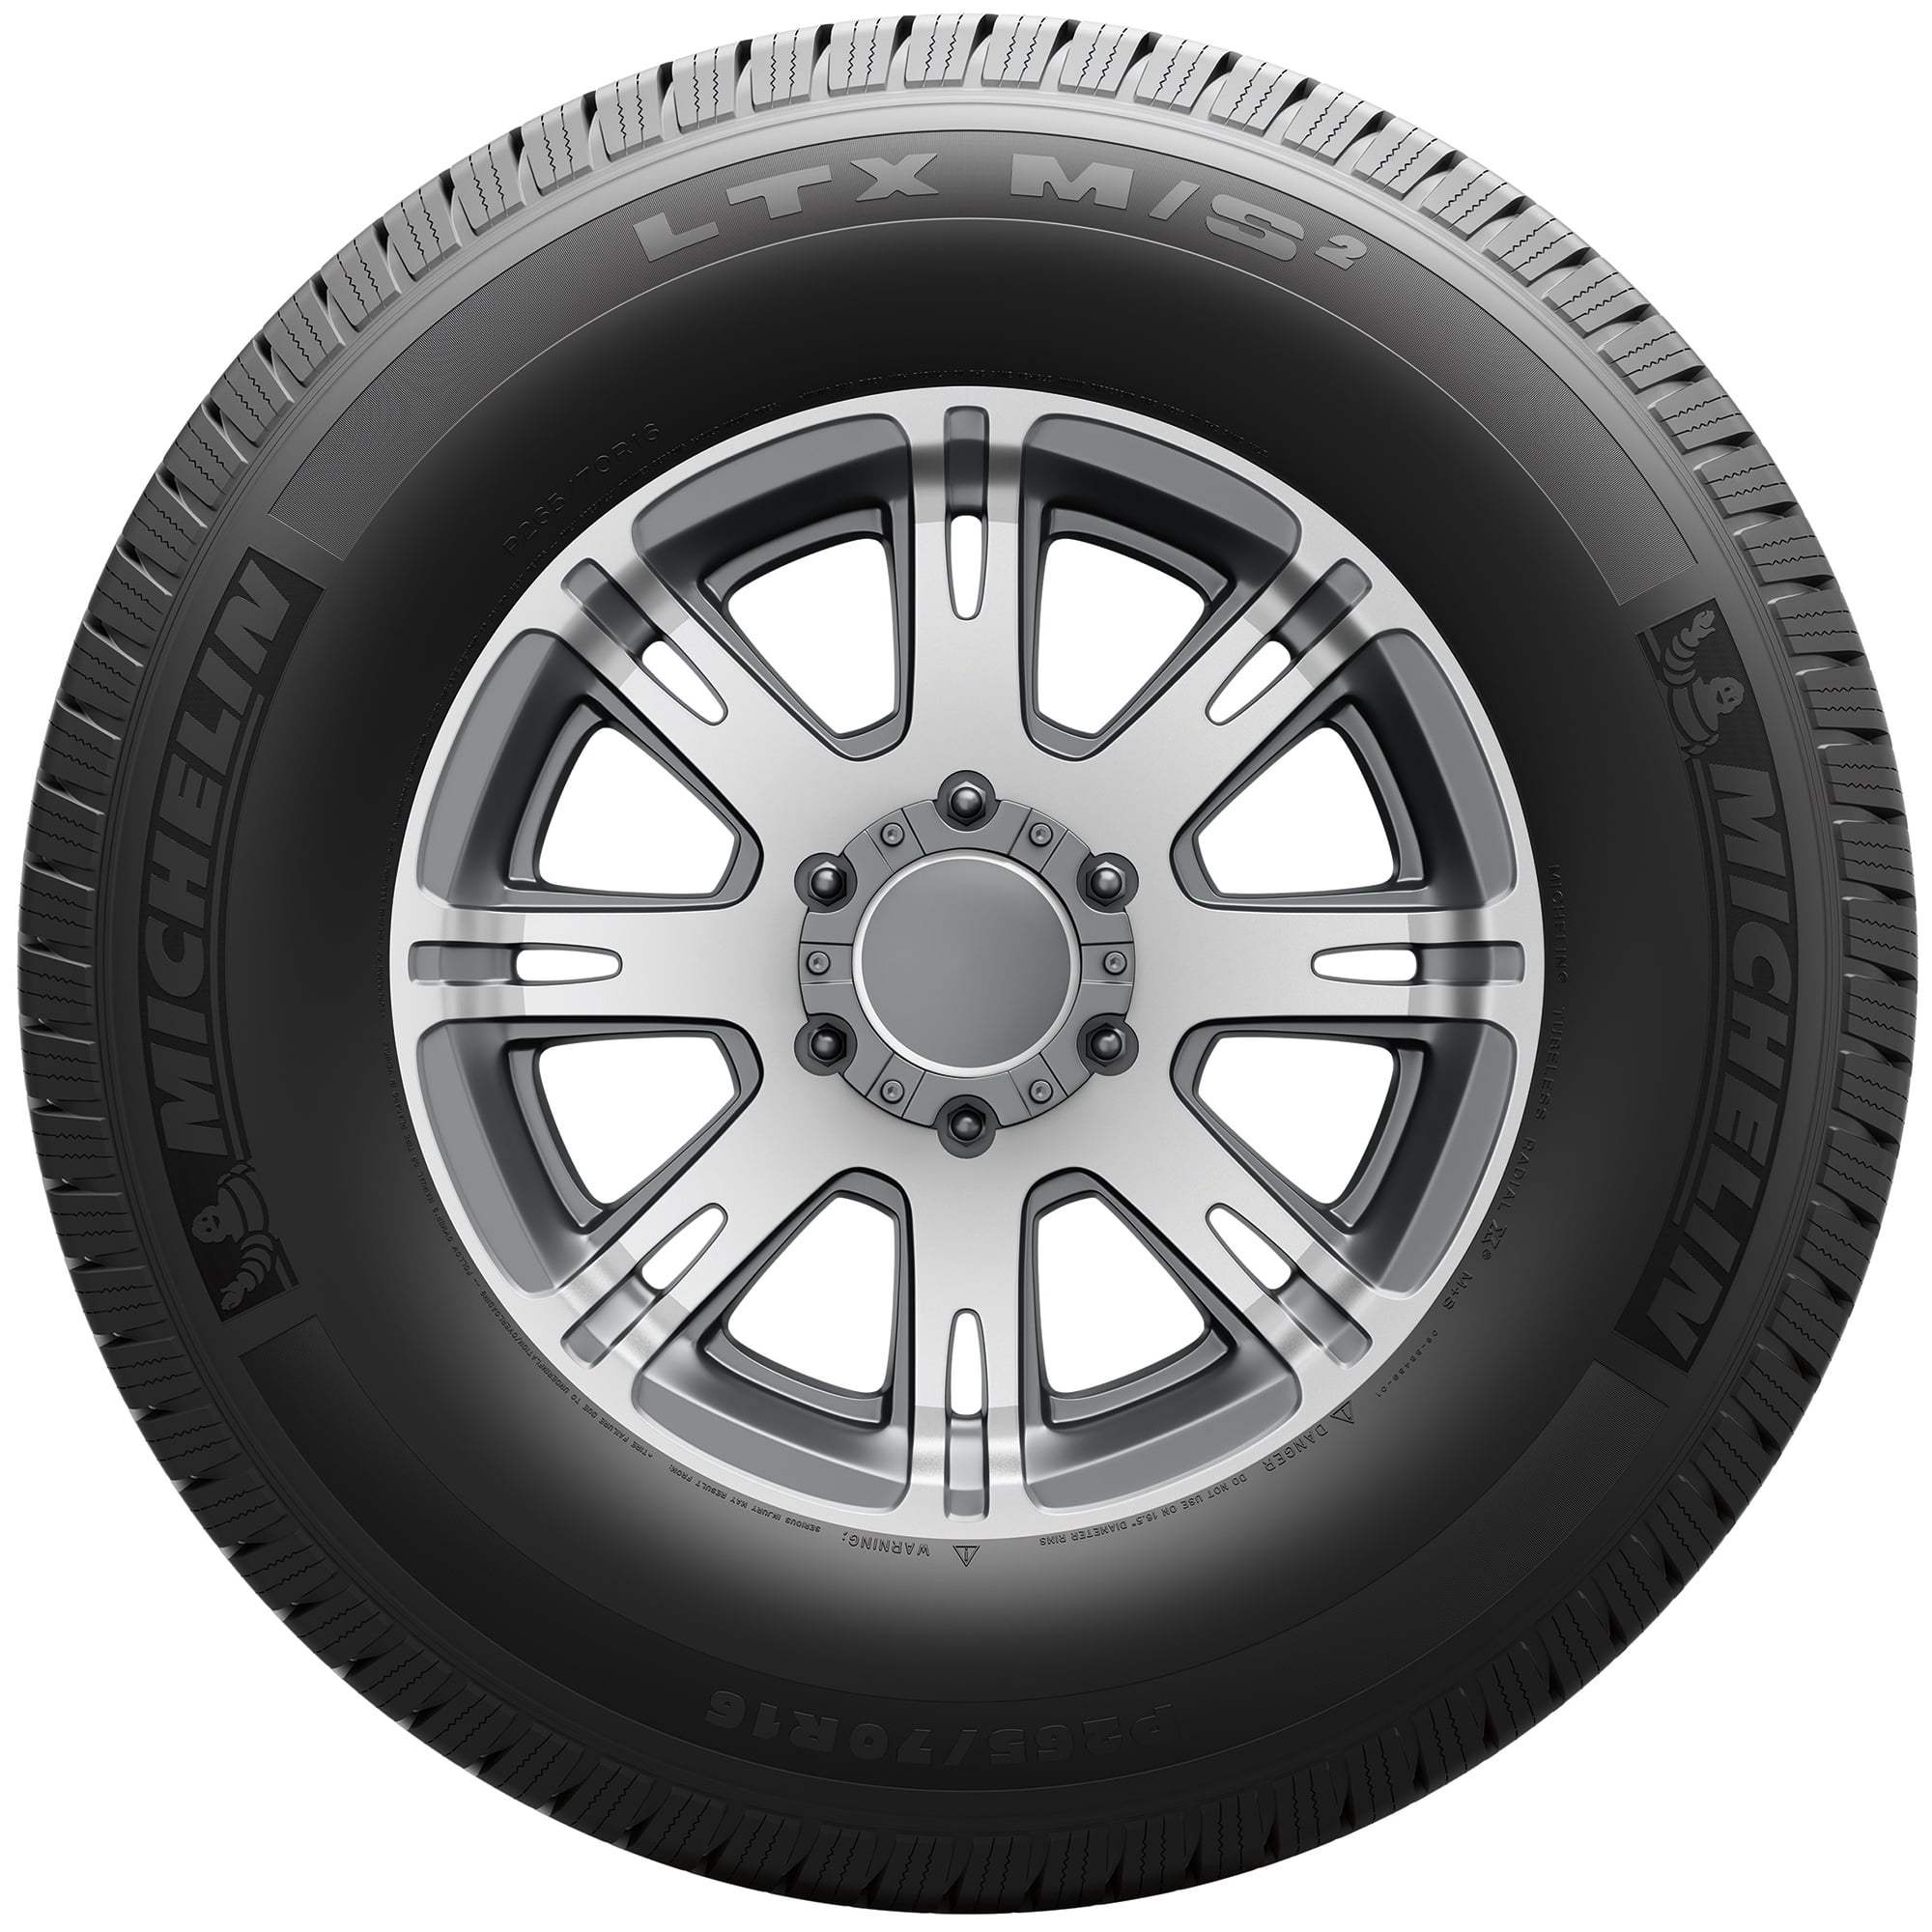 Michelin LTX M/S 2 Highway Tire P265/60R18 109H